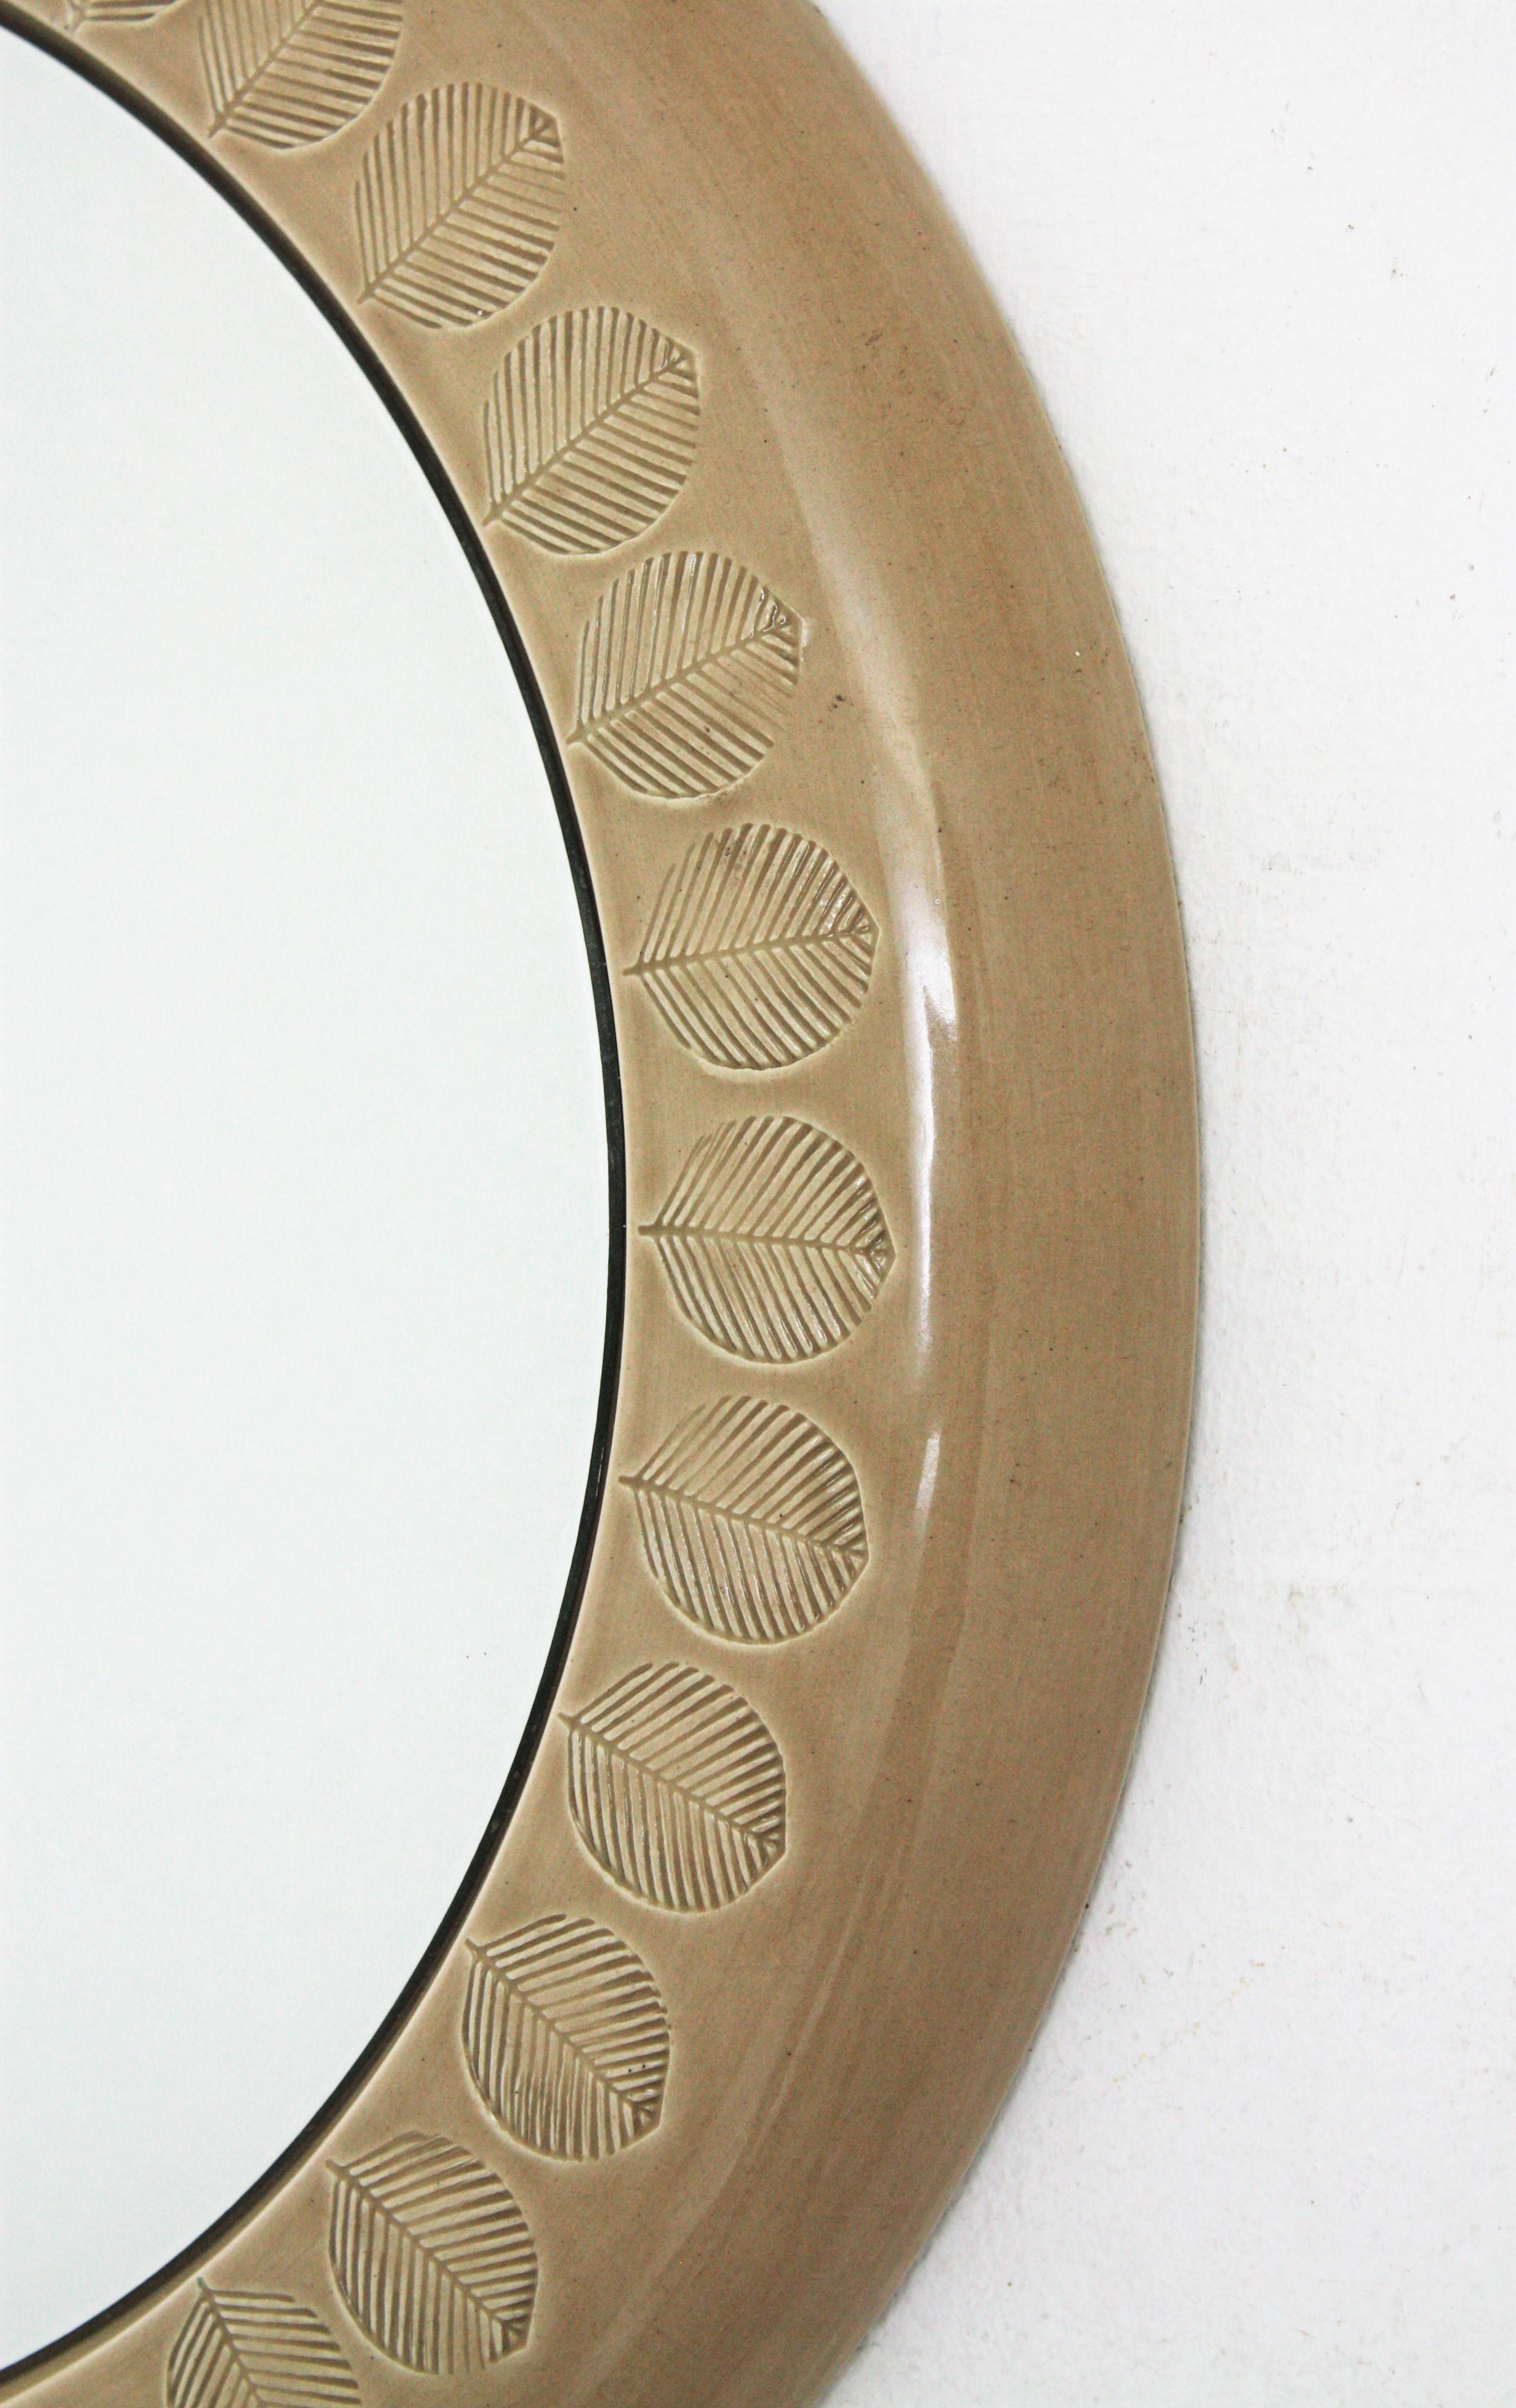 Aldo Londi Bitossi Beige Glazed Ceramic Round Wall Mirror with Leaf Motifs In Excellent Condition For Sale In Barcelona, ES